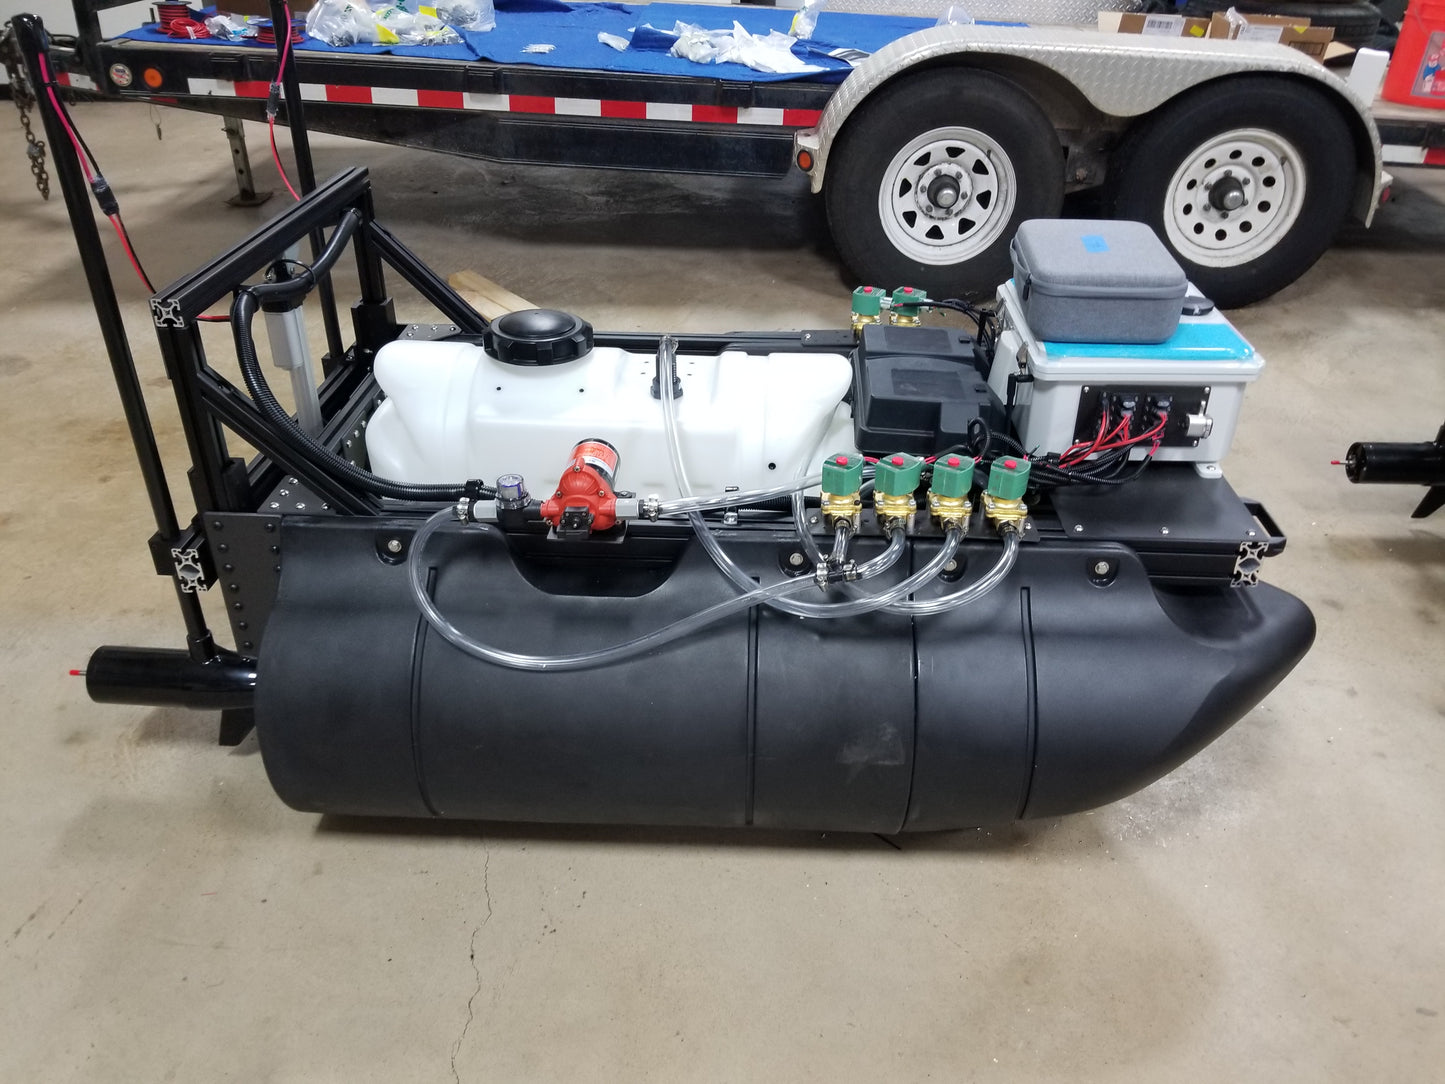 ADAPT Drone Boat - Autonomous Spraying Boat